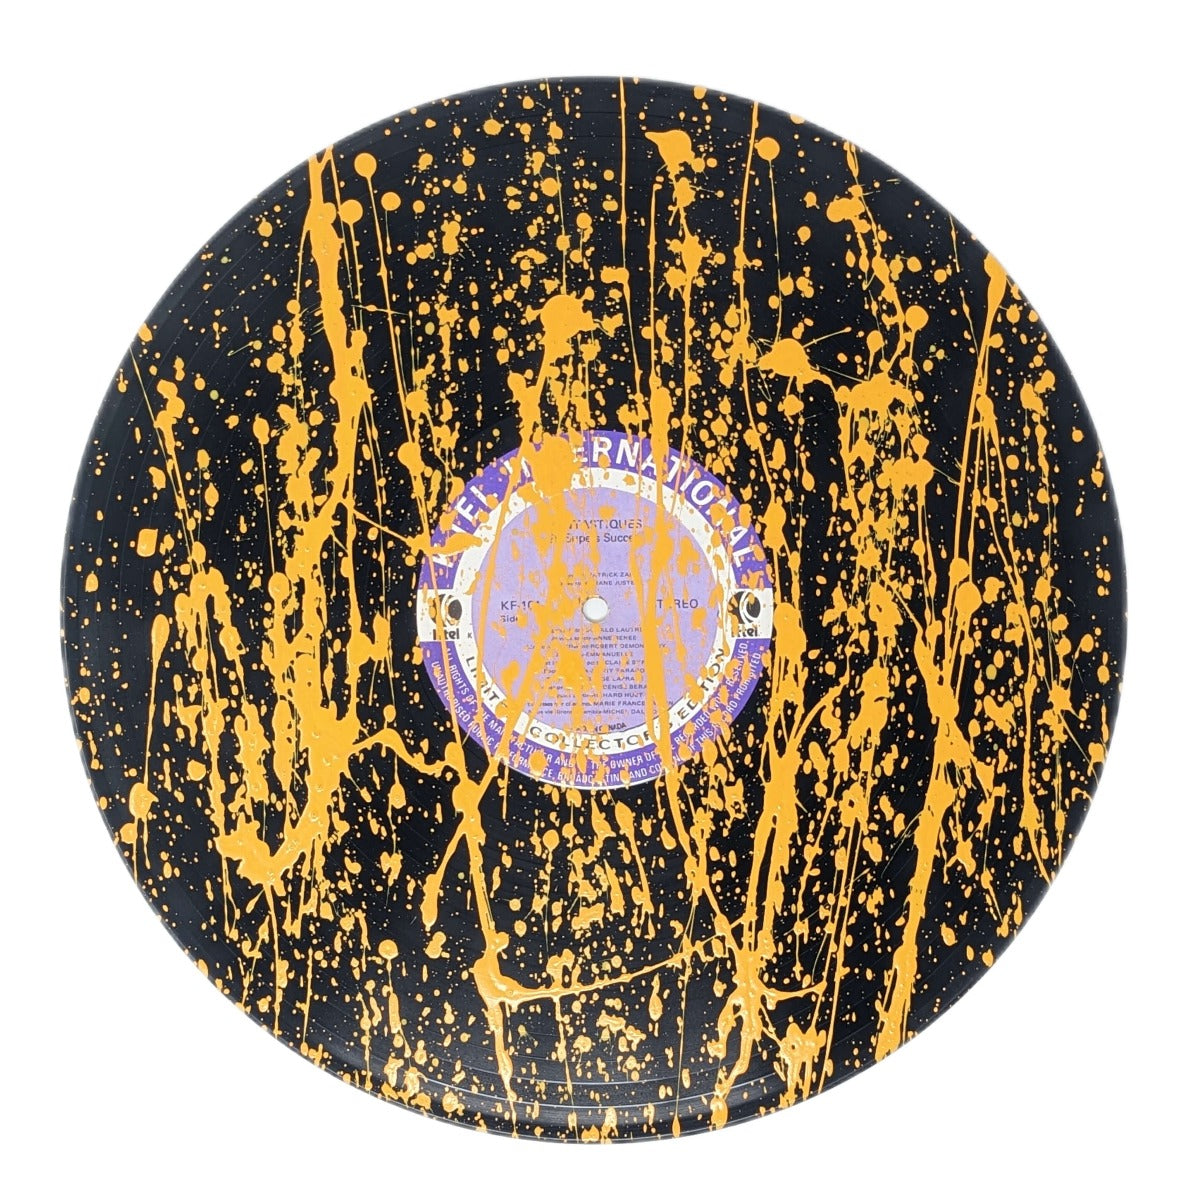 Vinyl record - Painted